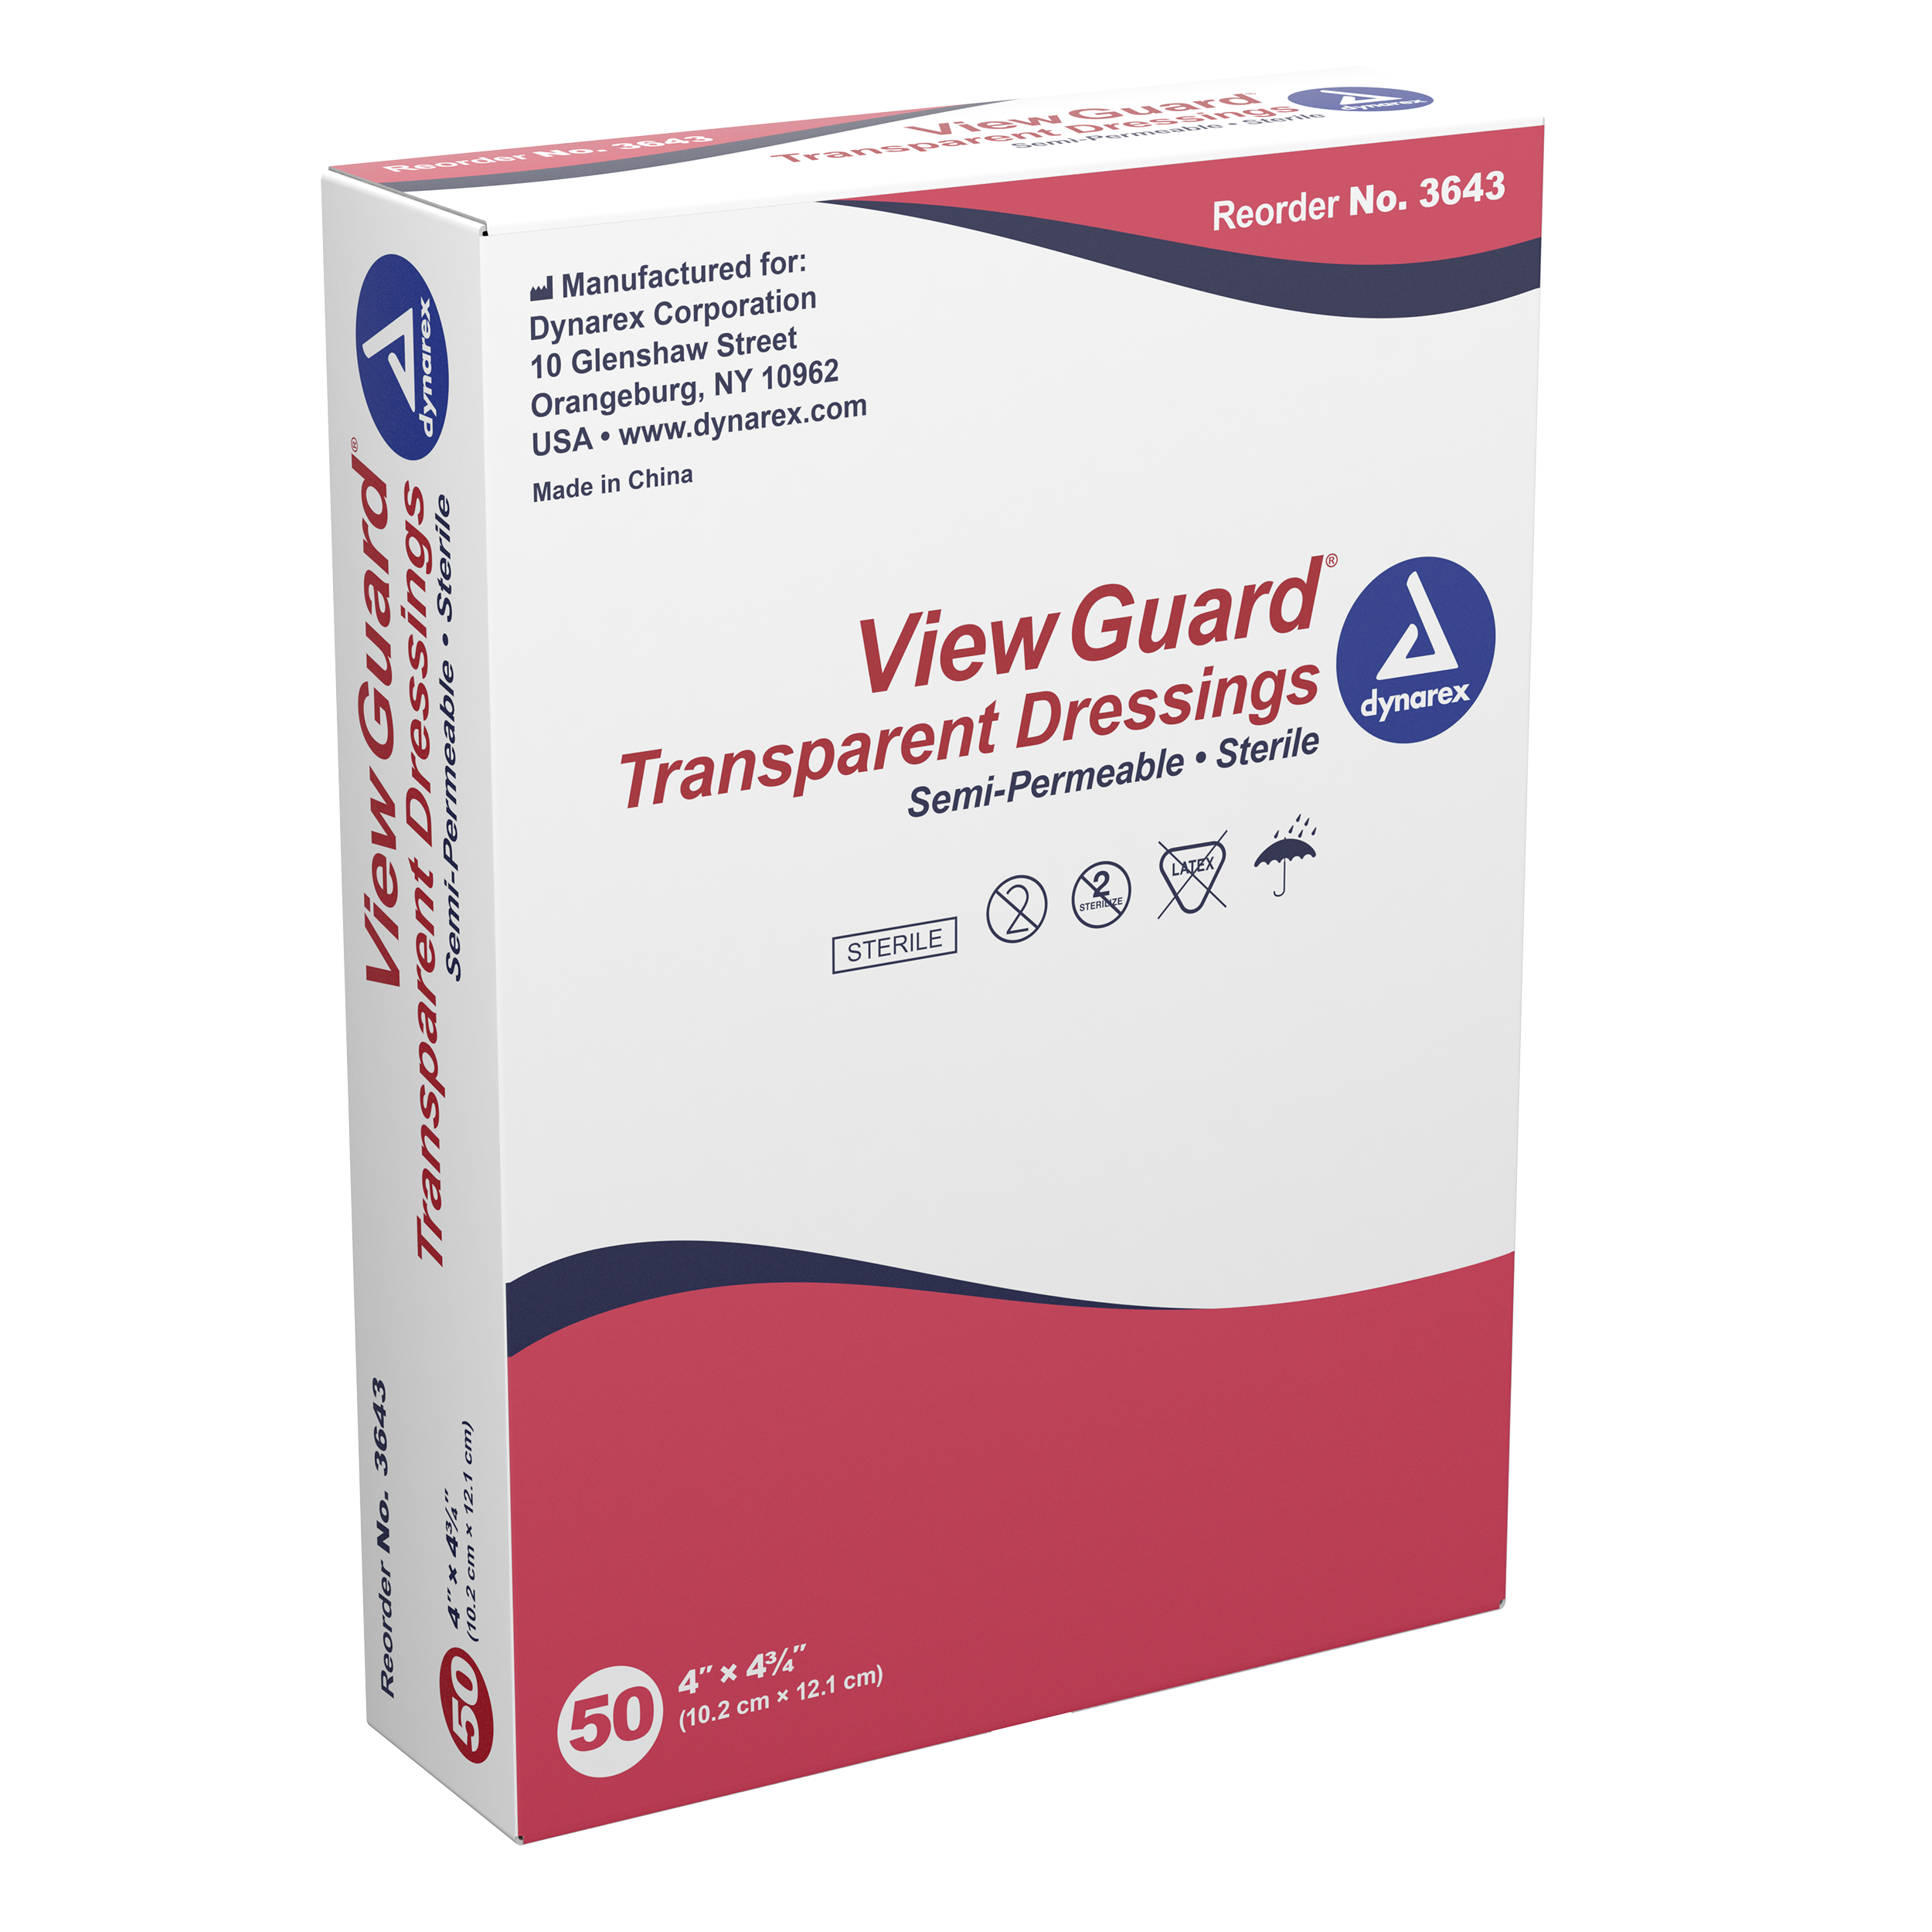 View Guard Transparent Dressings Sterile 4